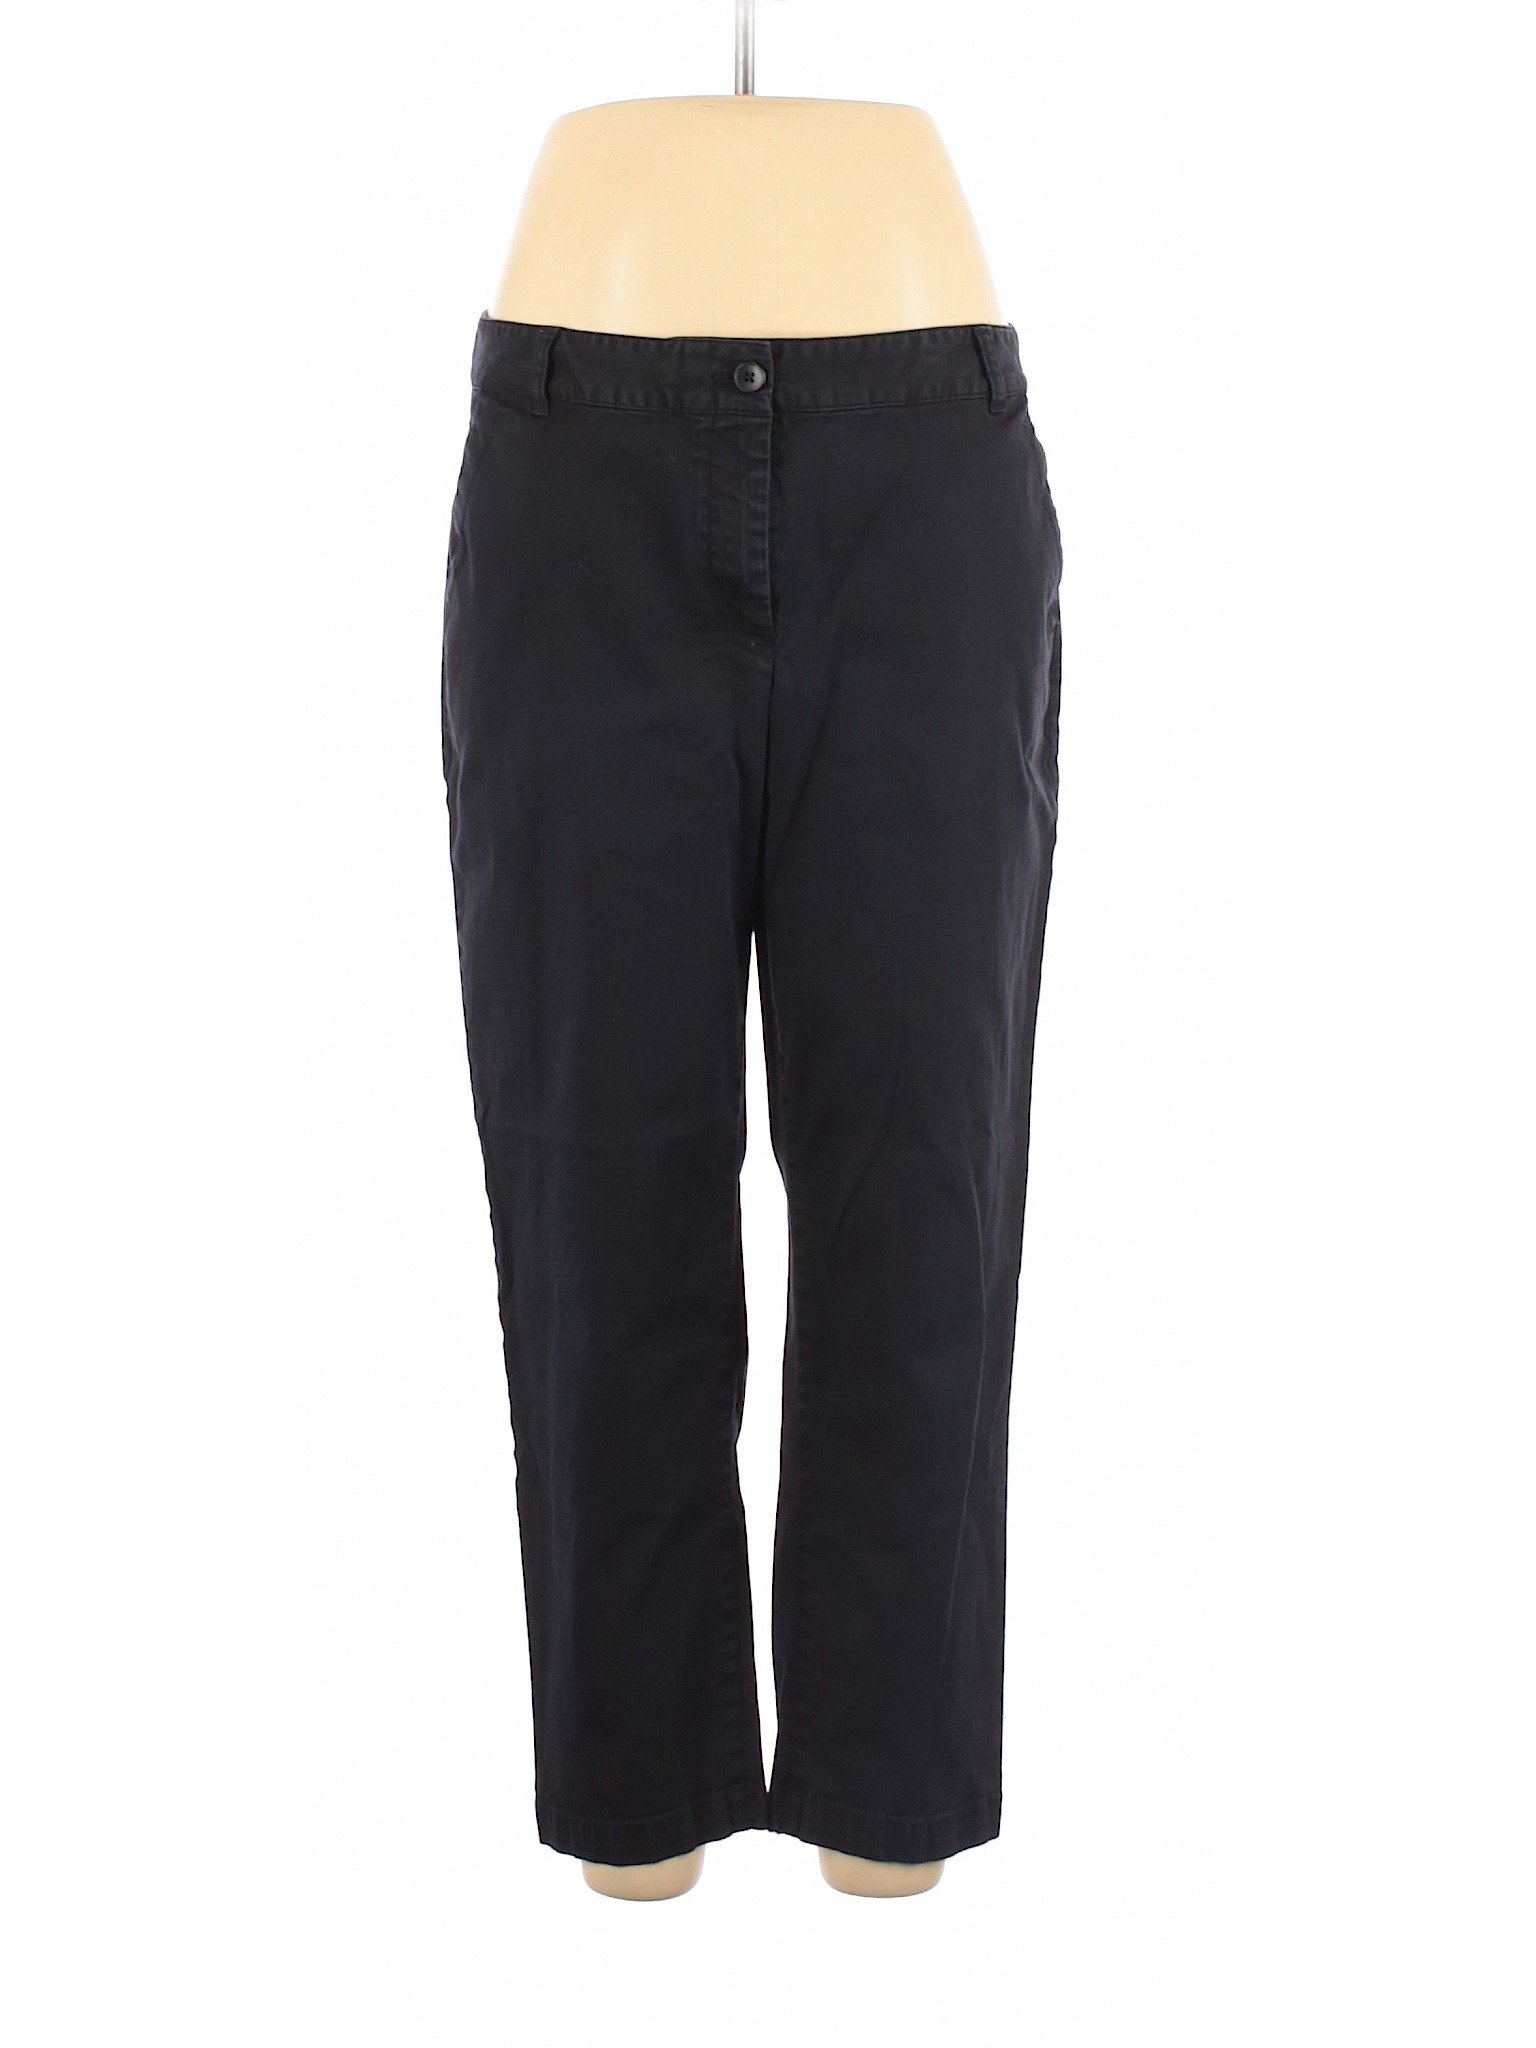 Talbots Women Black Casual Pants 4 | eBay